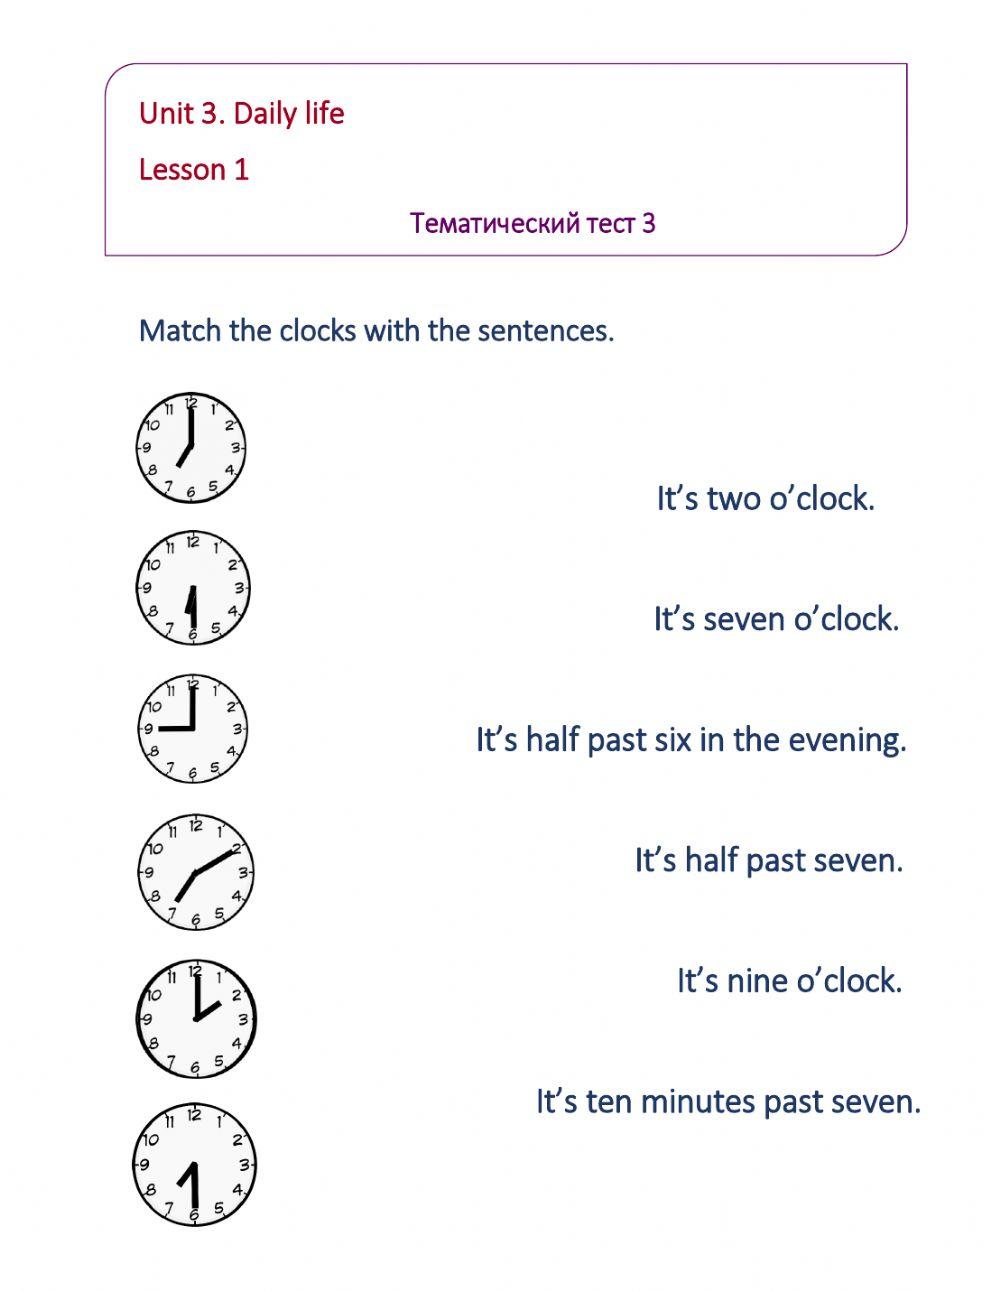 English-4-Unit 3-Lesson 1 Тематический тест 3 «Daily life». Match the clocks with the sentences (1)